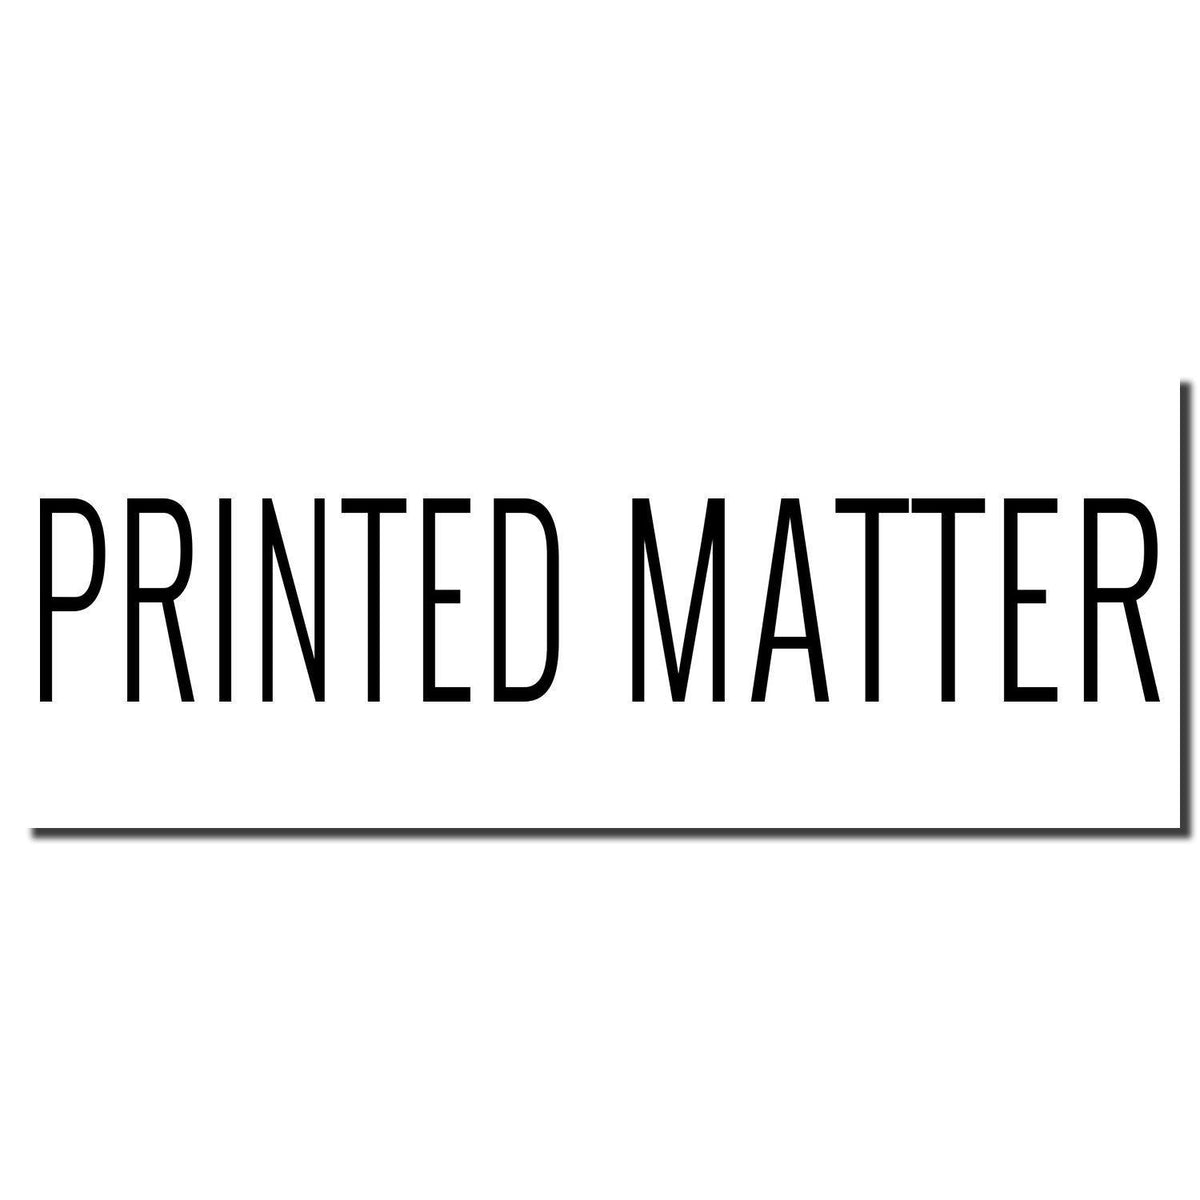 Enlarged Imprint Slim Pre-Inked Printed Matter Stamp Sample